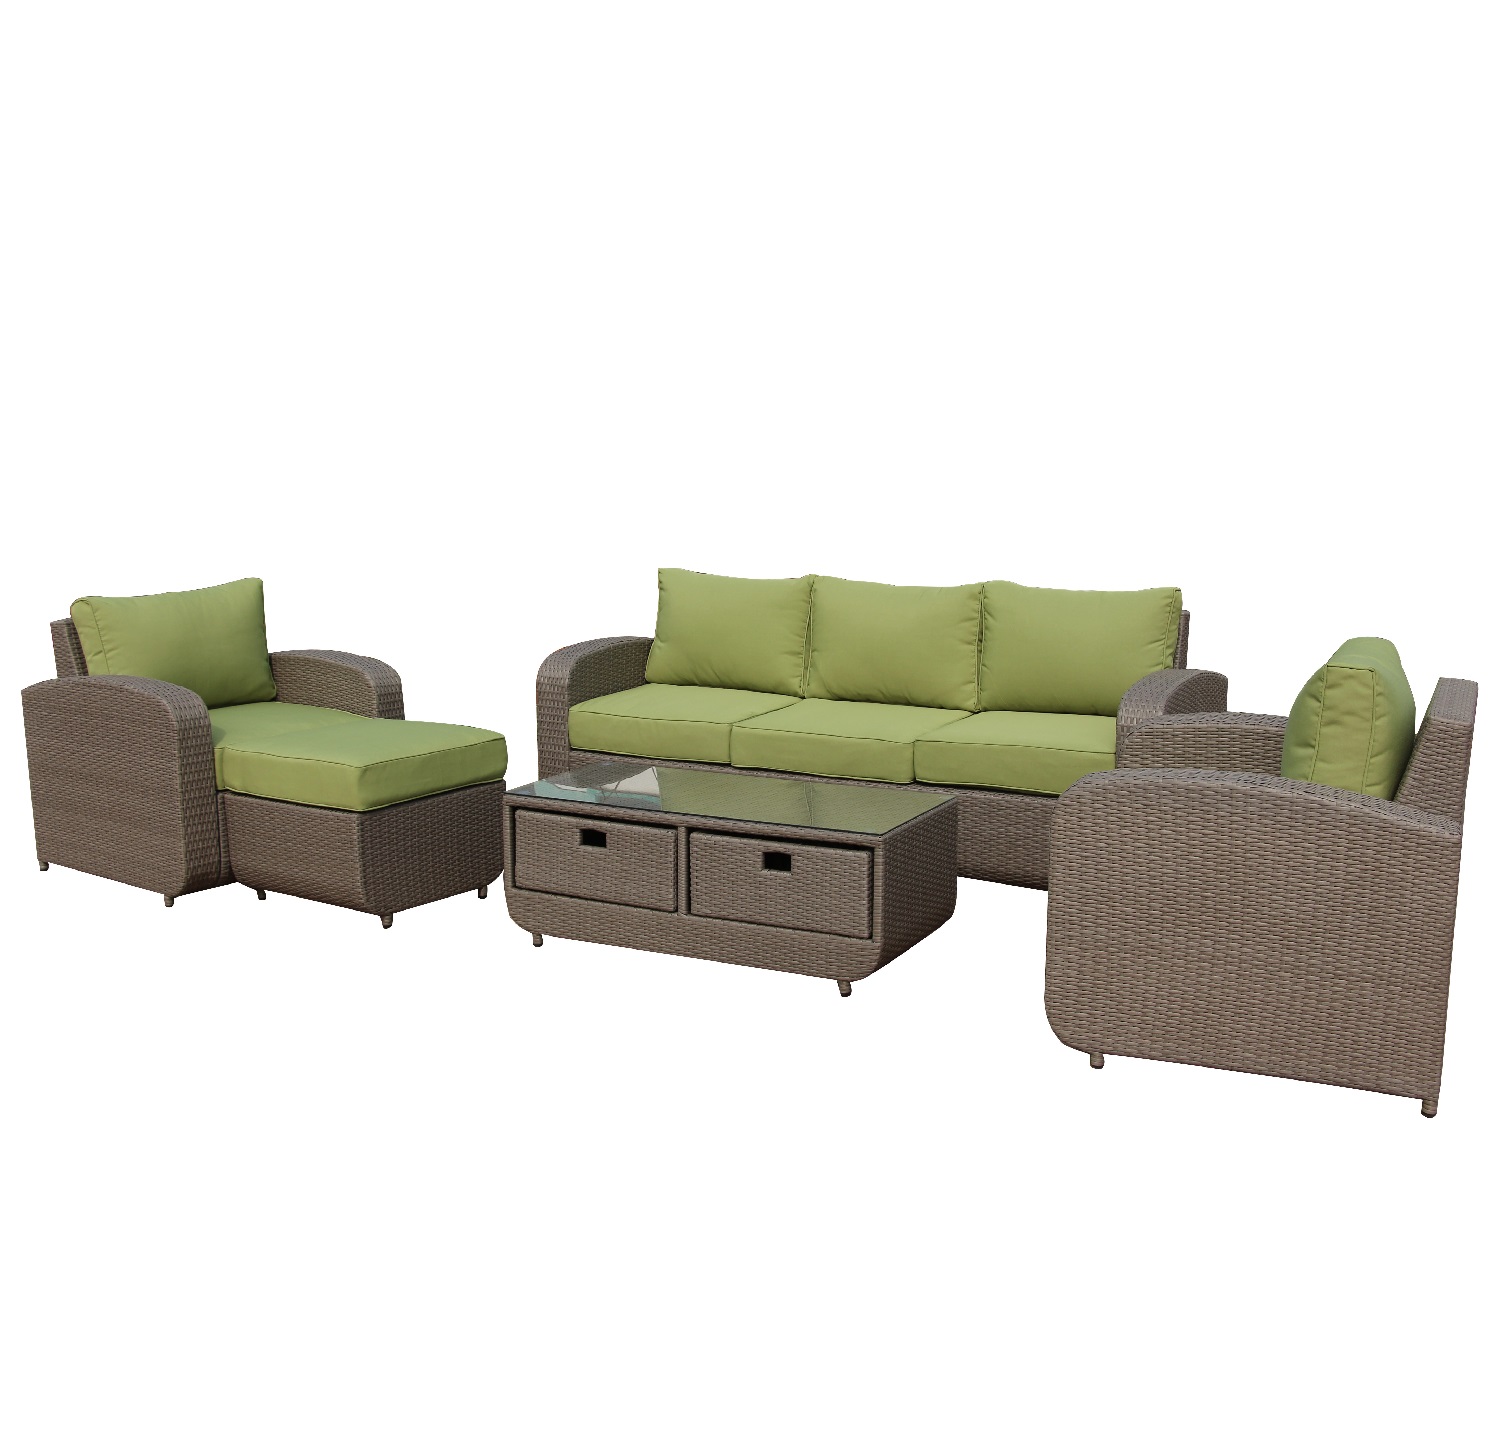 Outdoor Furniture Garden Ploy Plastic Rattan Sofa Set And Bench